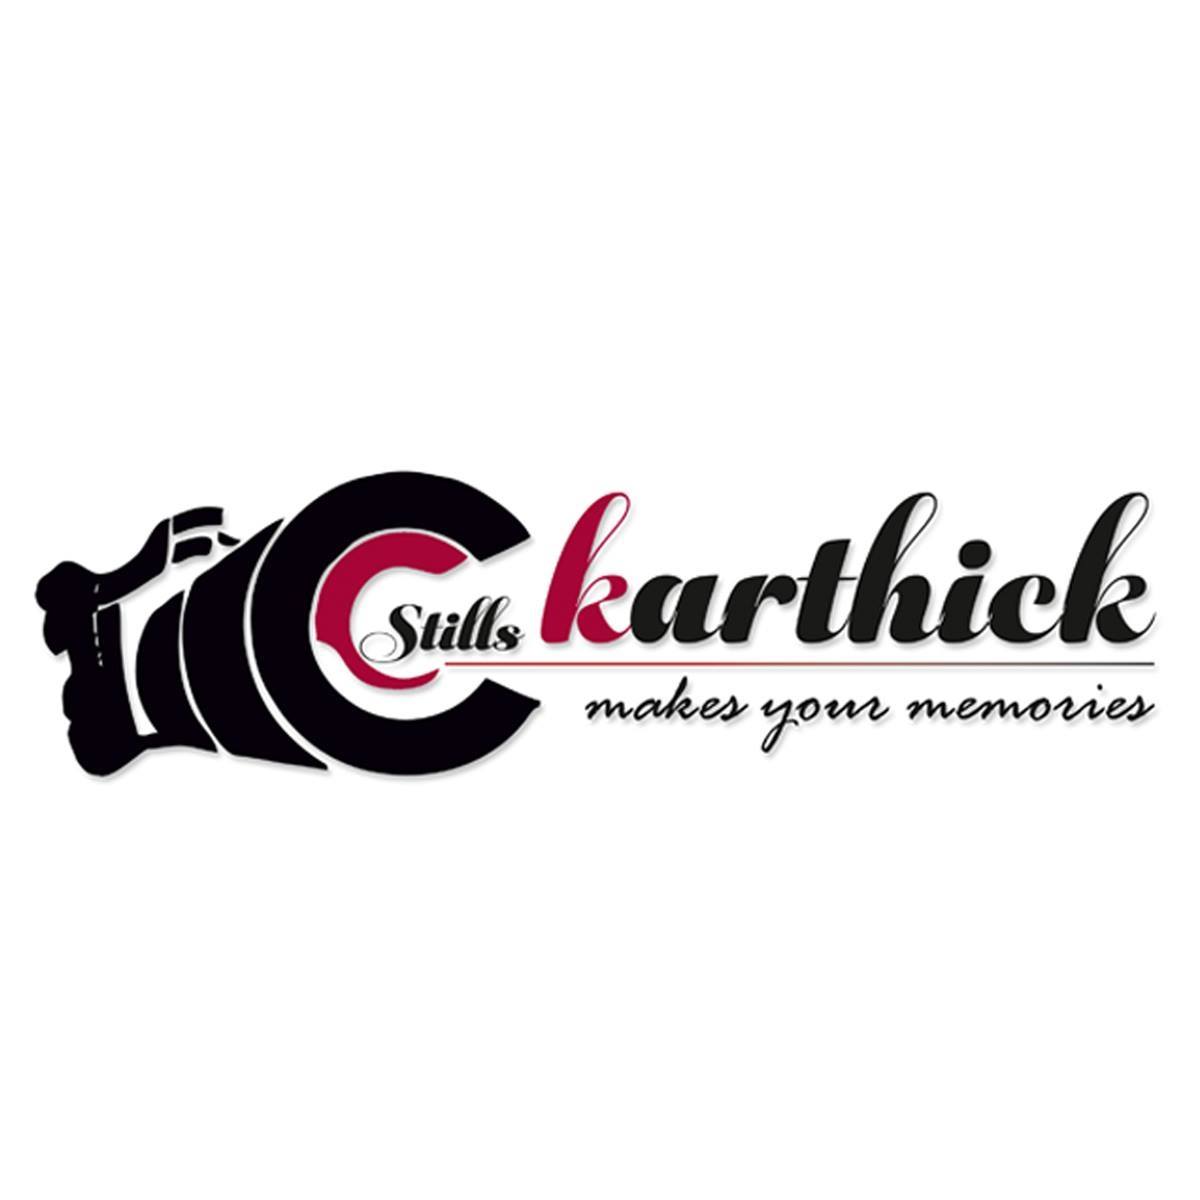 Stills karthick|Photographer|Event Services